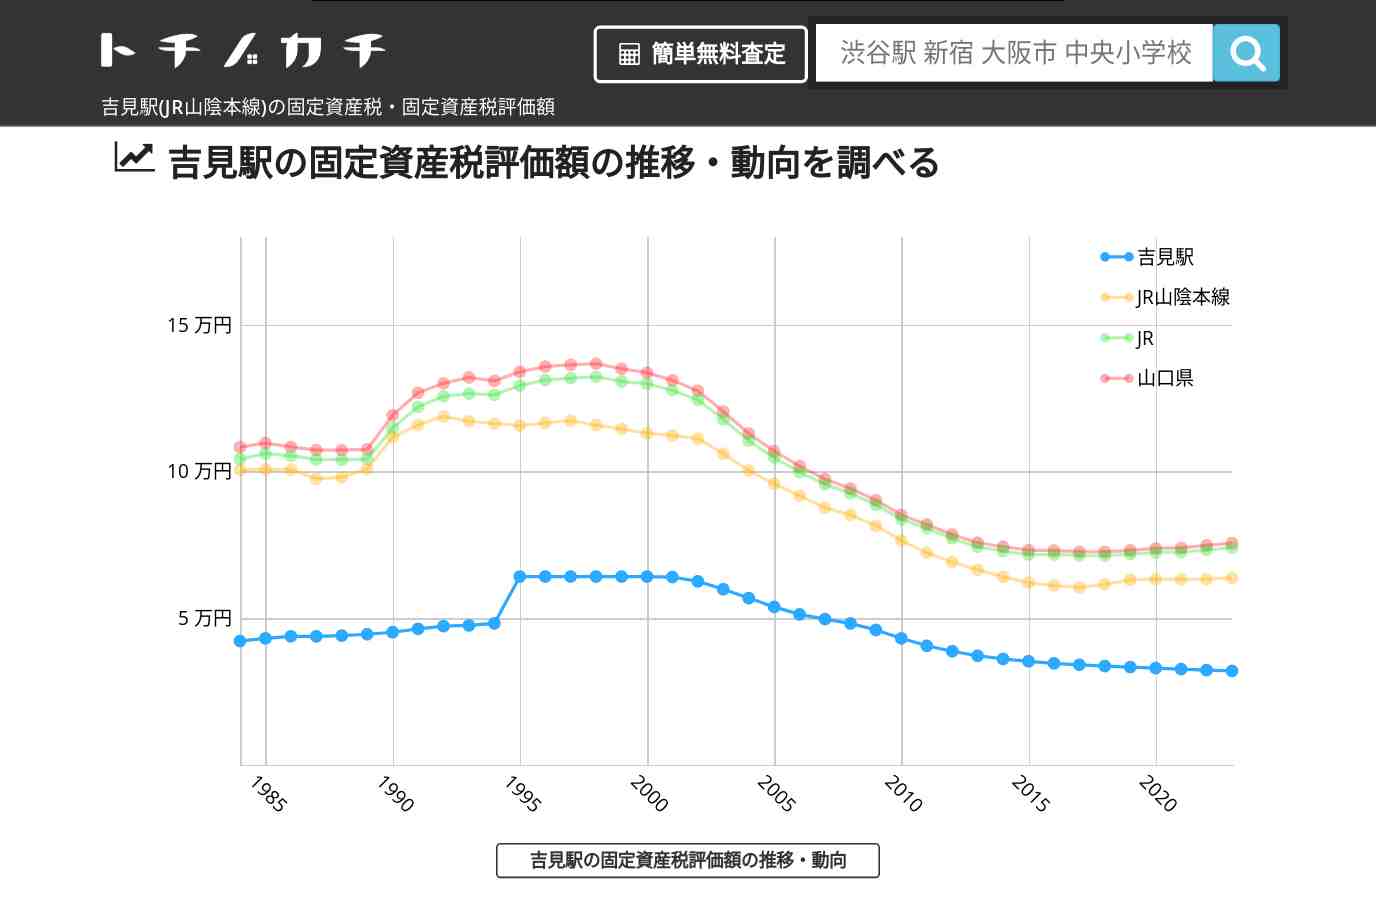 吉見駅(JR山陰本線)の固定資産税・固定資産税評価額 | トチノカチ